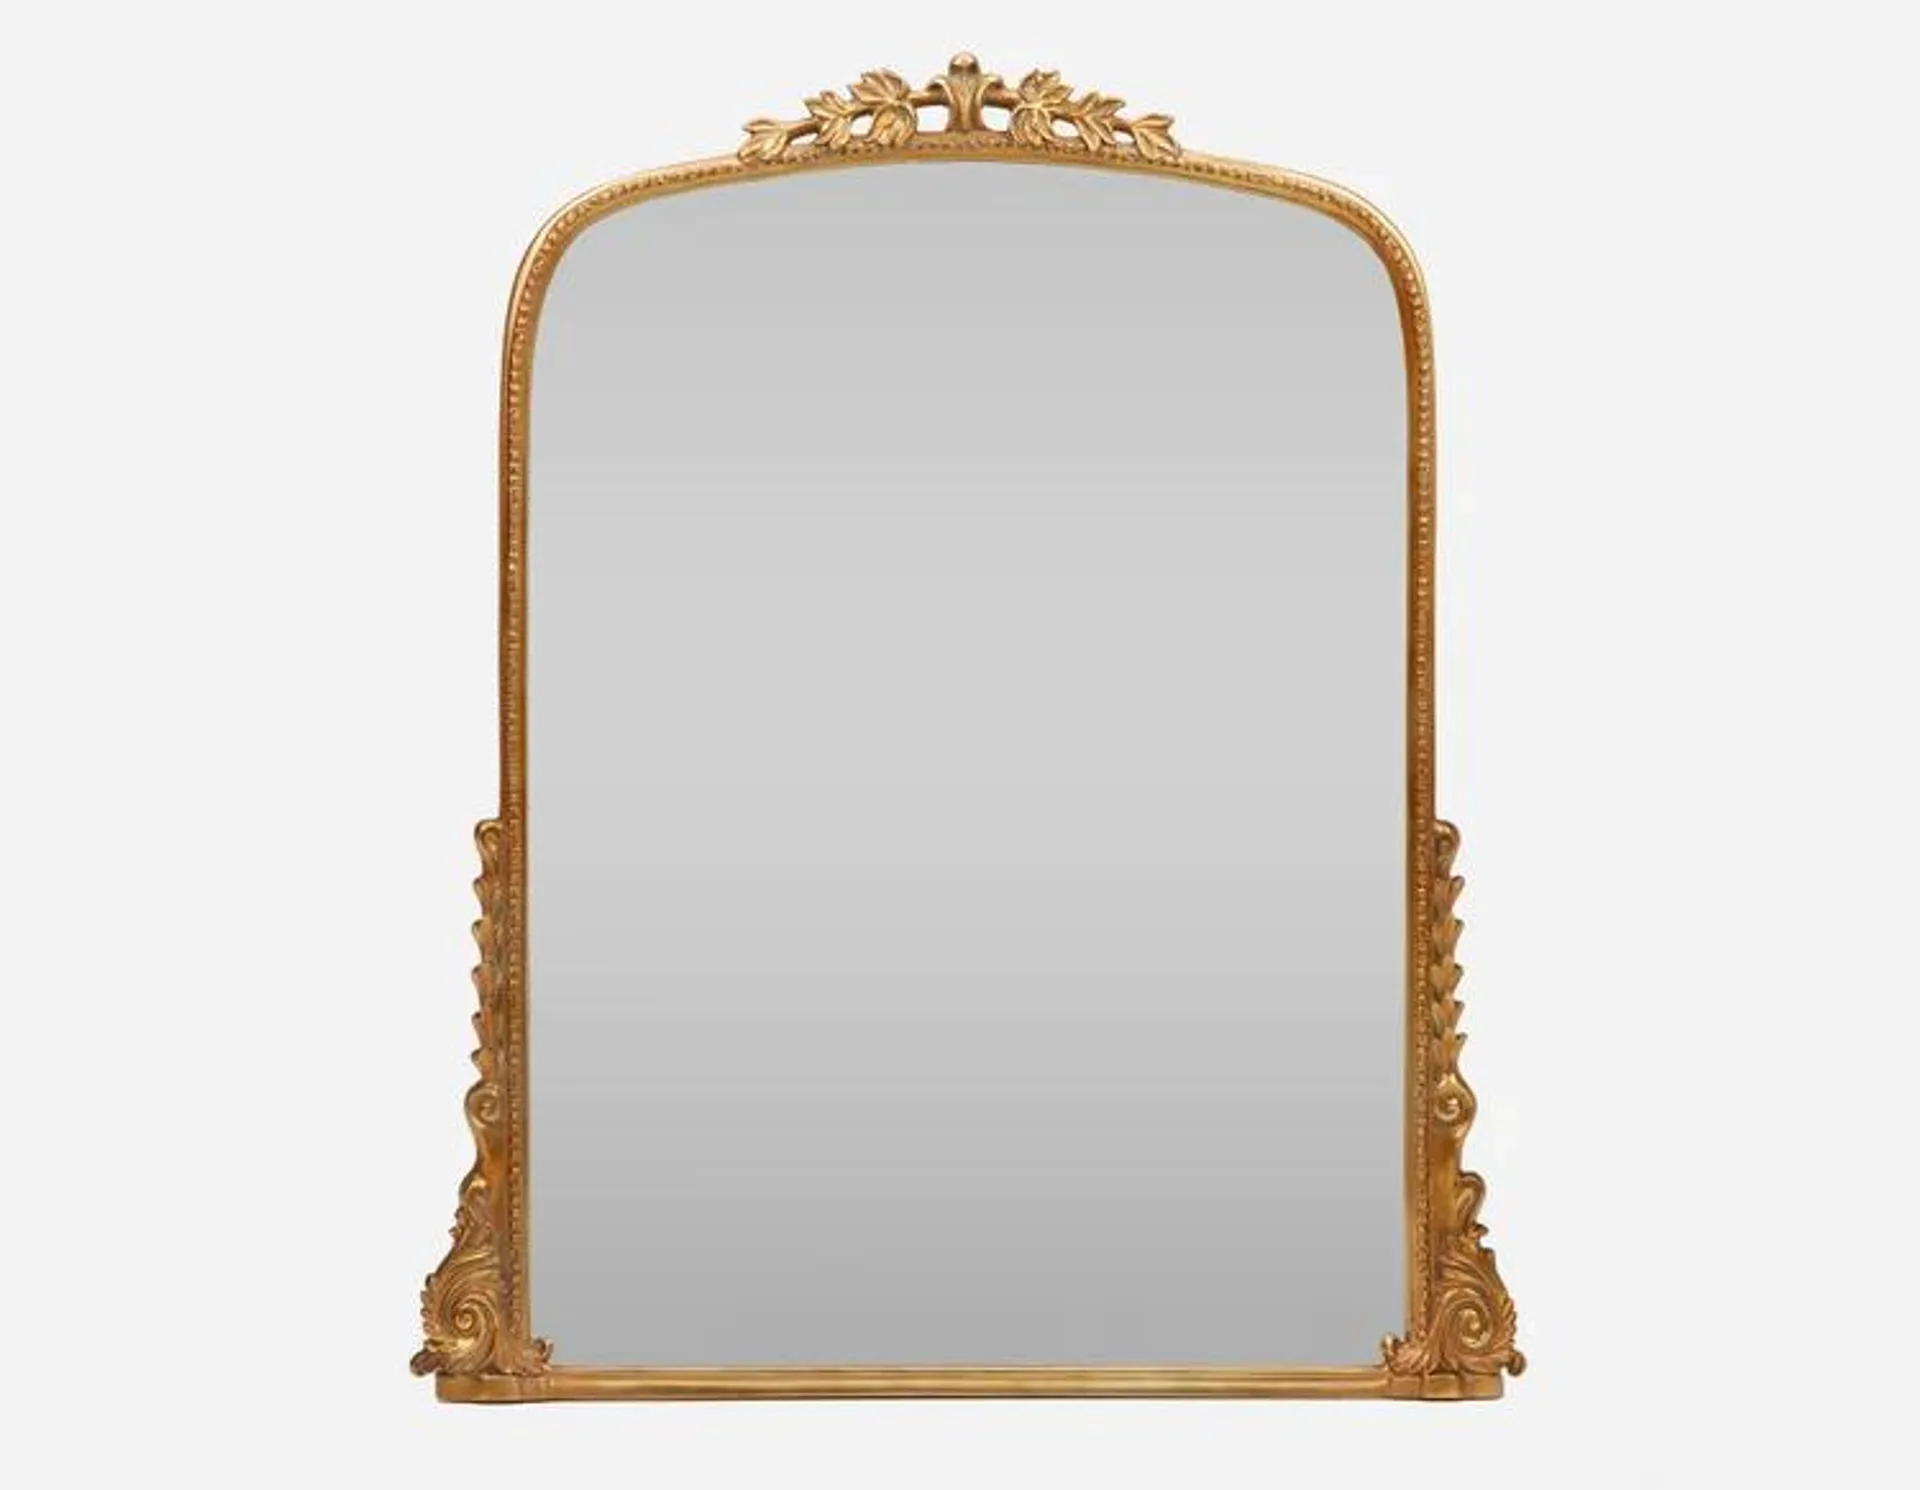 PASCALE iron framed mirror 128 cm x 153 cm